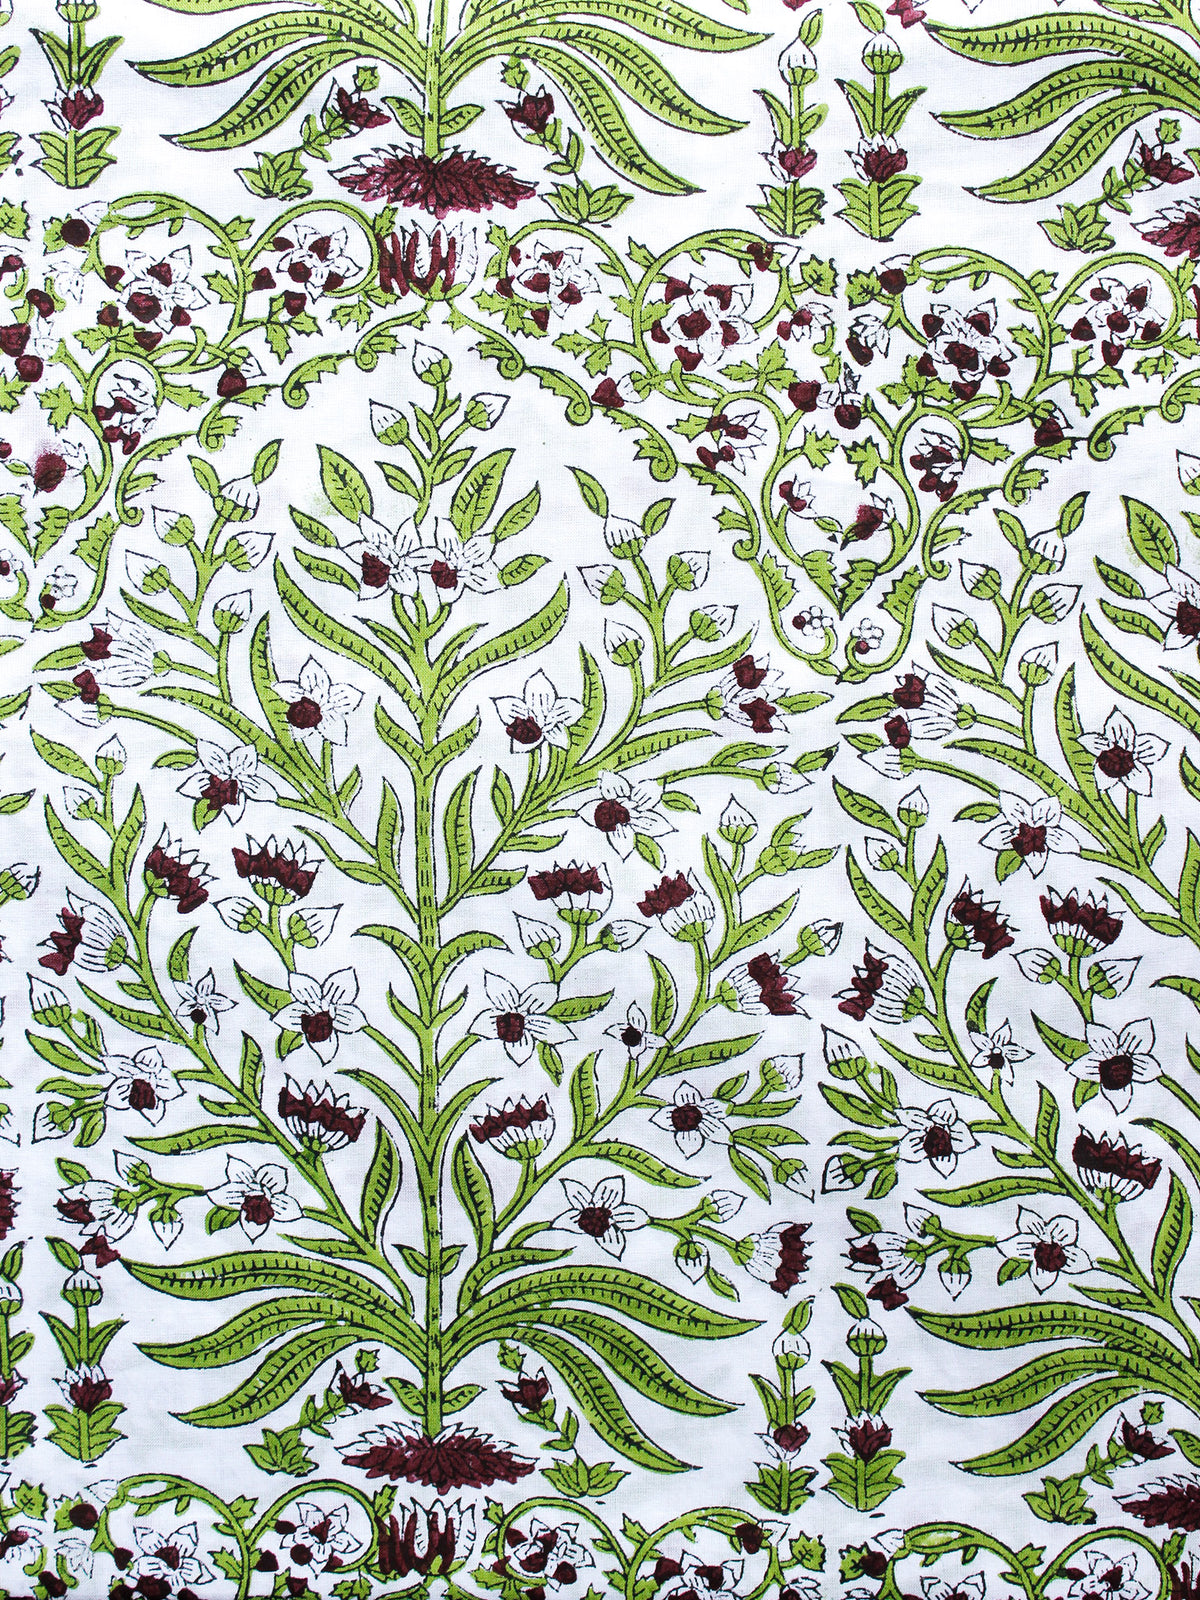 White Wine Red Green Hand Block Printed Cotton Fabric Per Meter - F001F1494